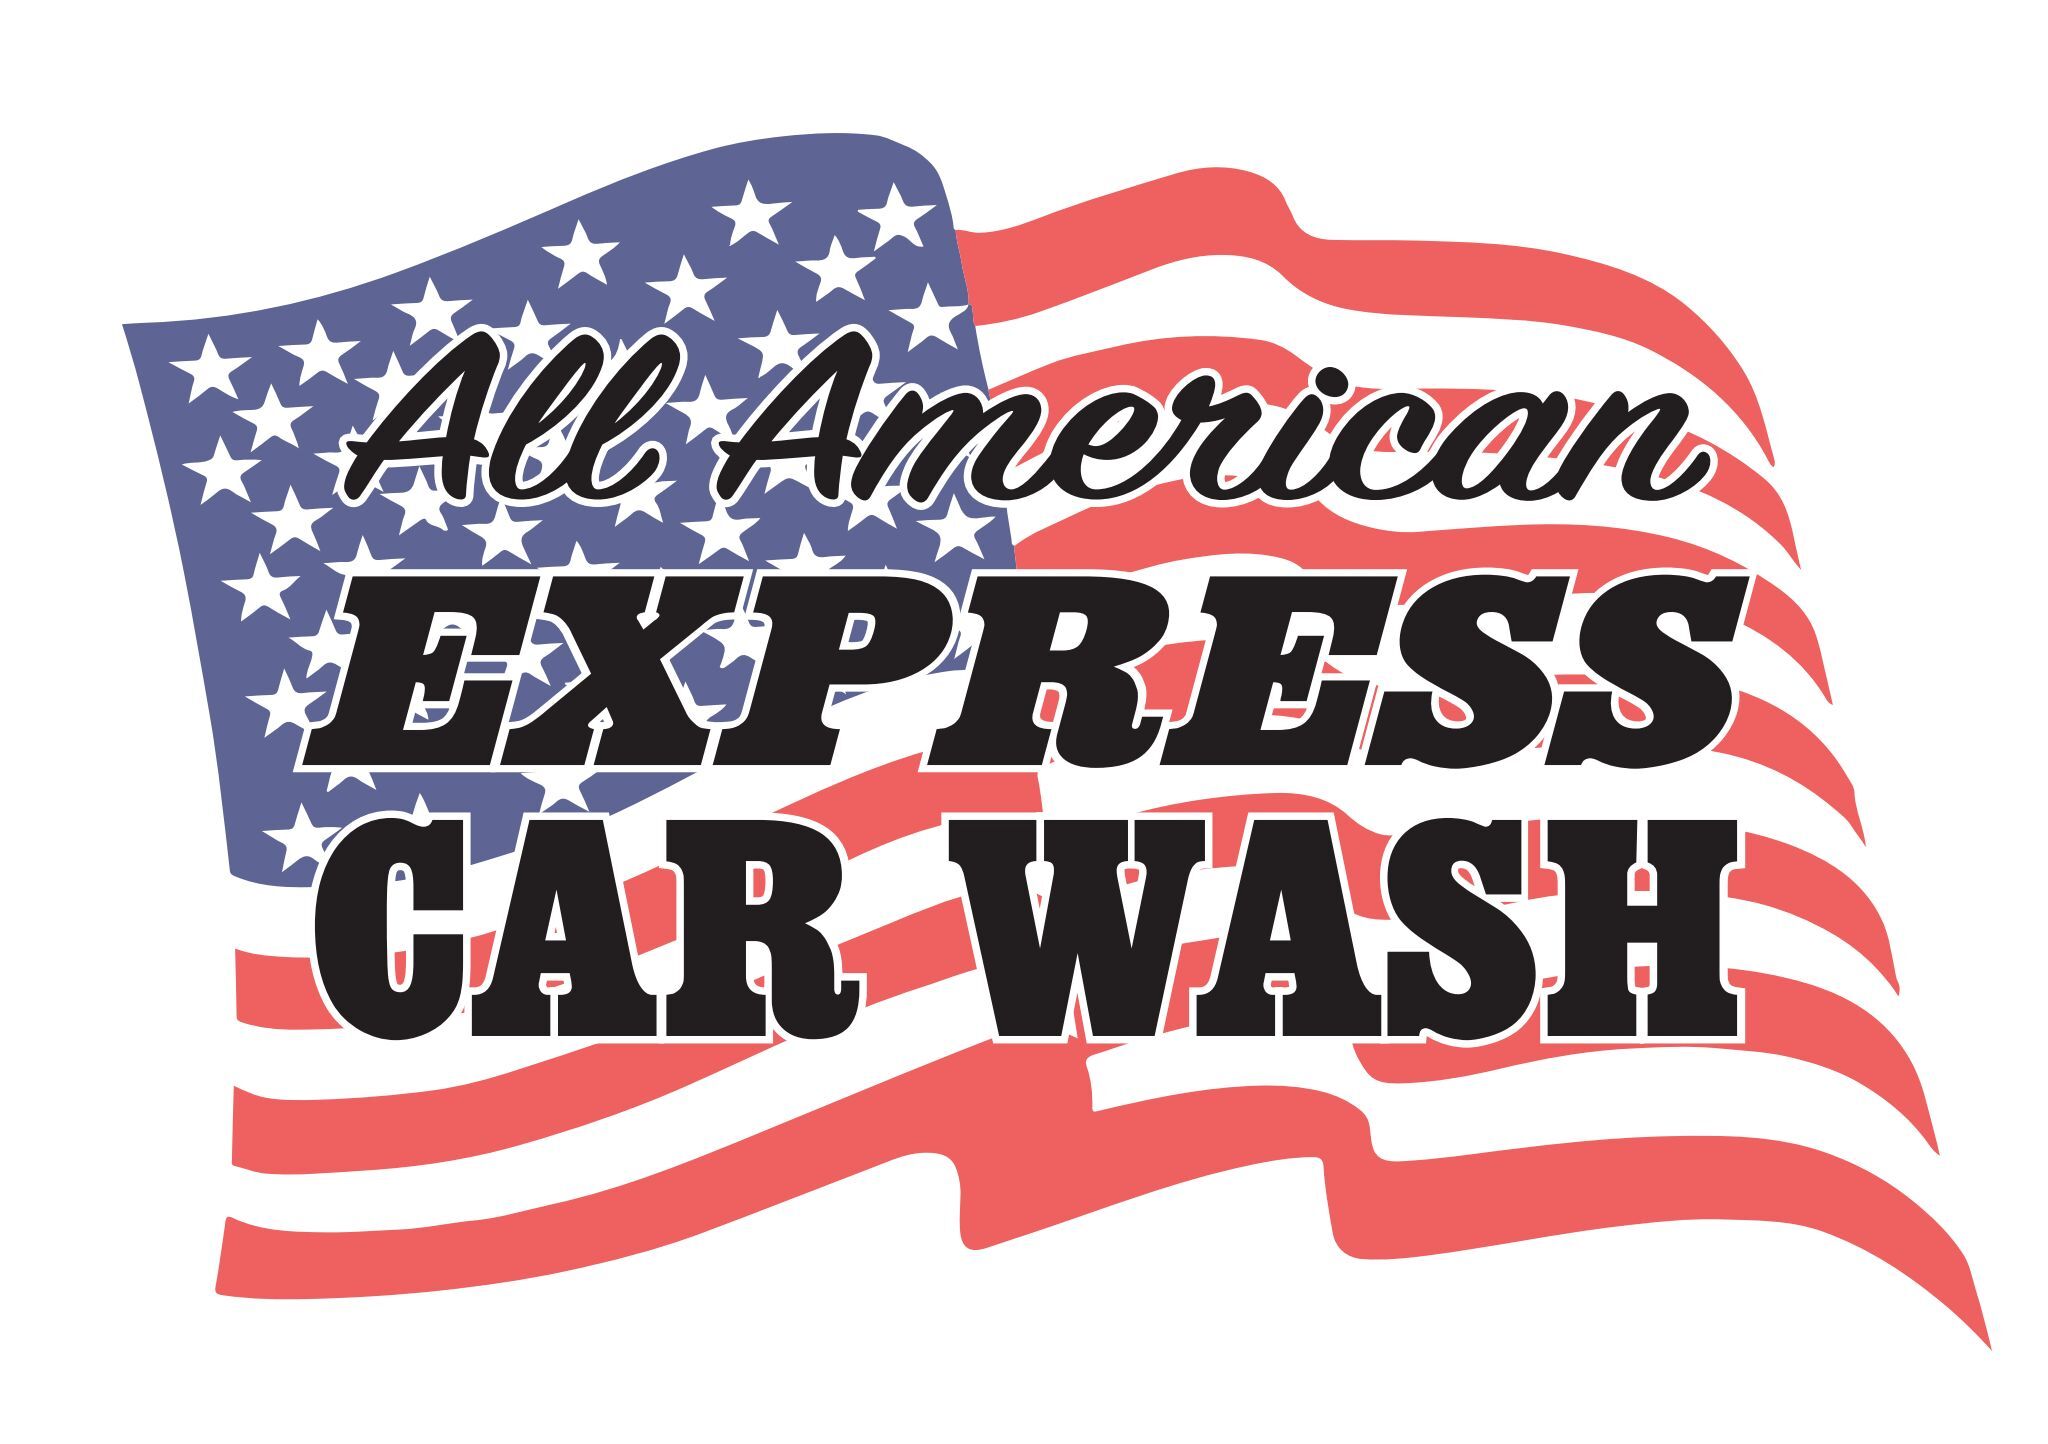 All American Express Car Wash